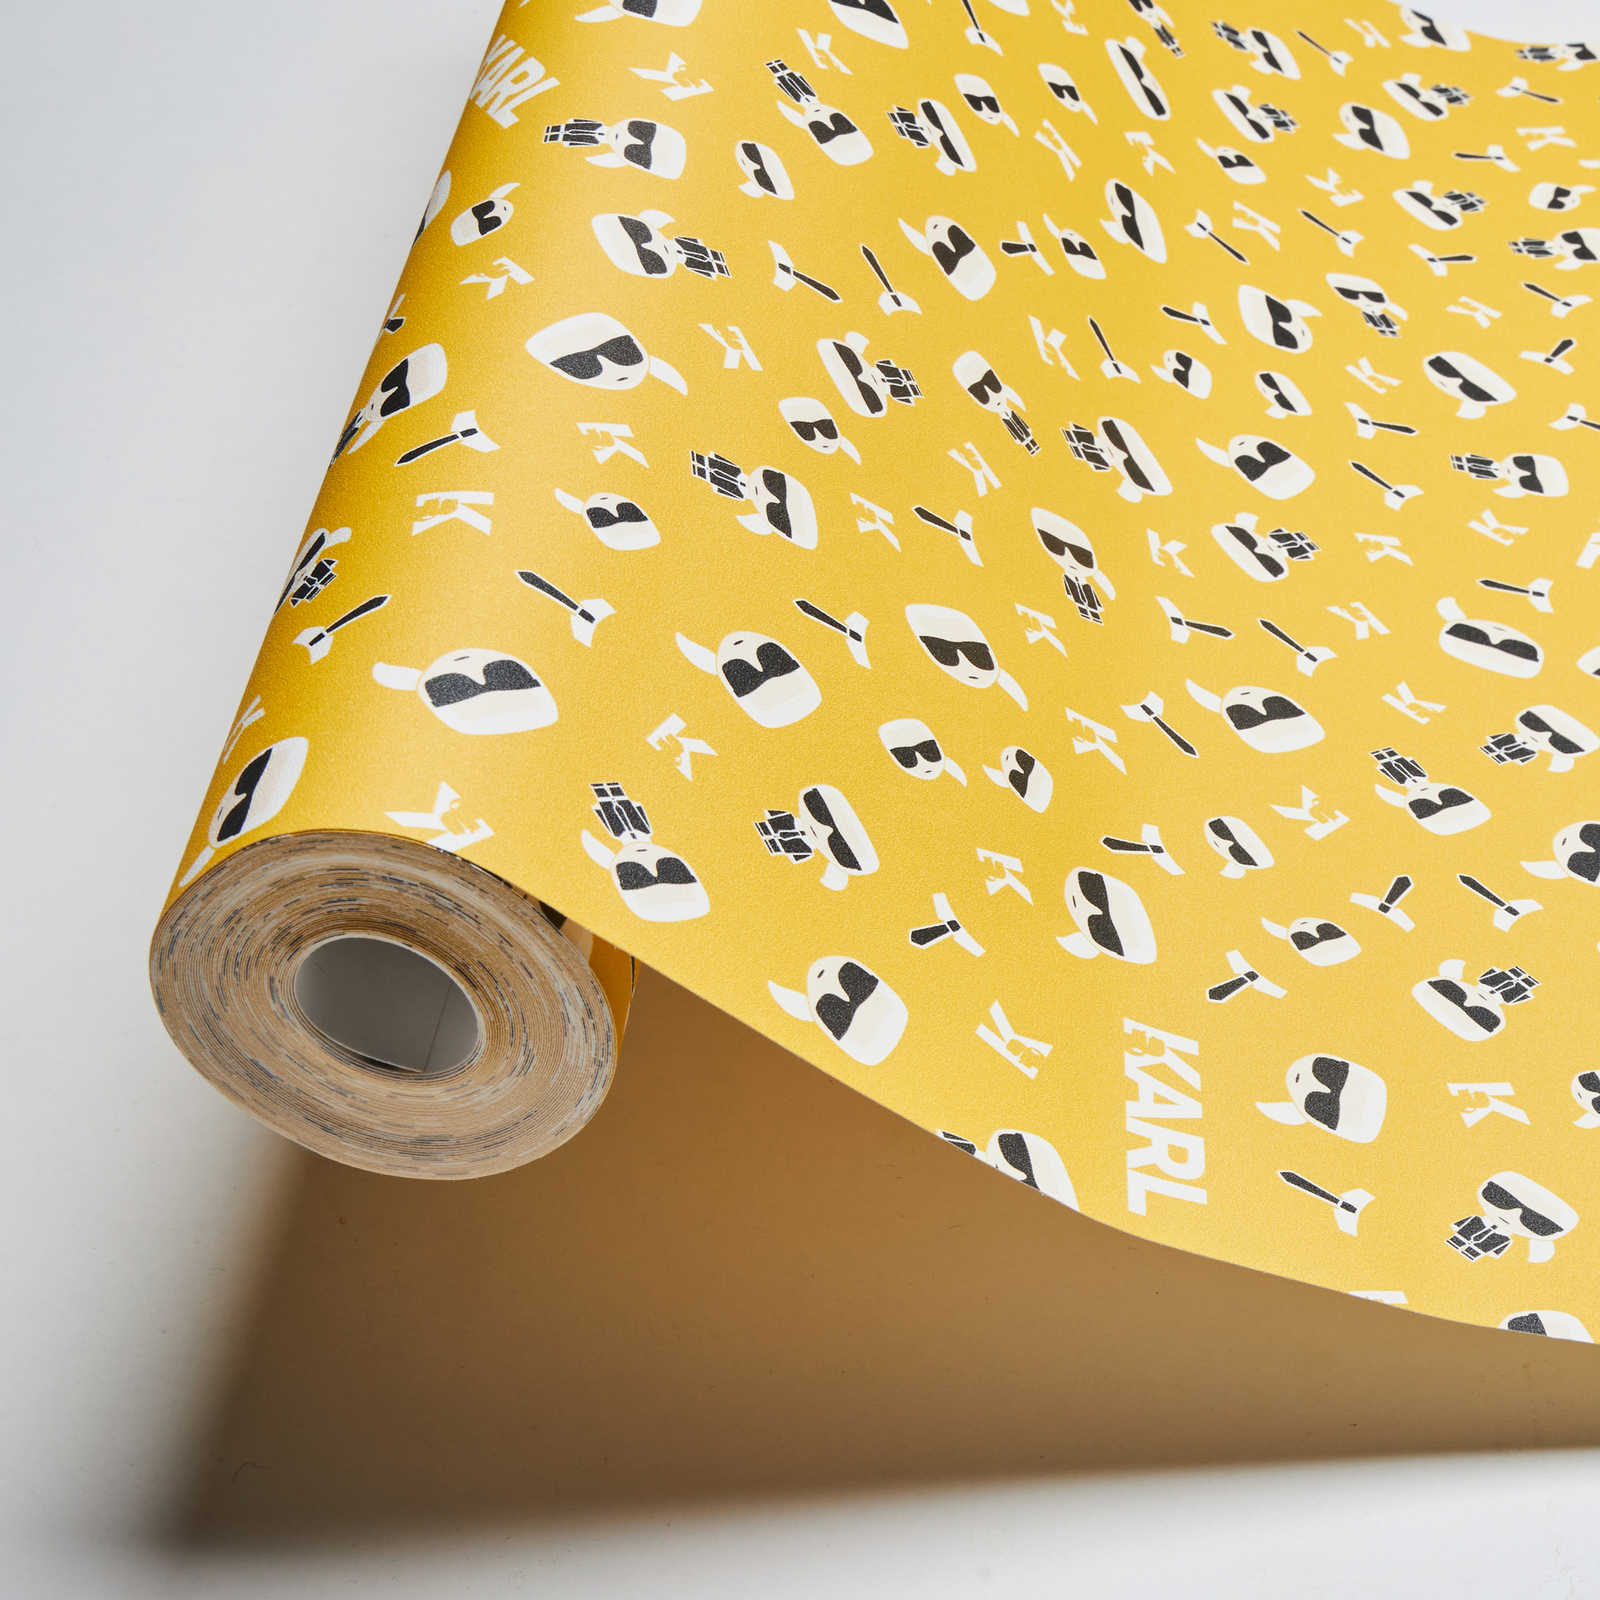             Carta da parati in tessuto non tessuto Karl LAGERFELD disegno fumetto - giallo
        